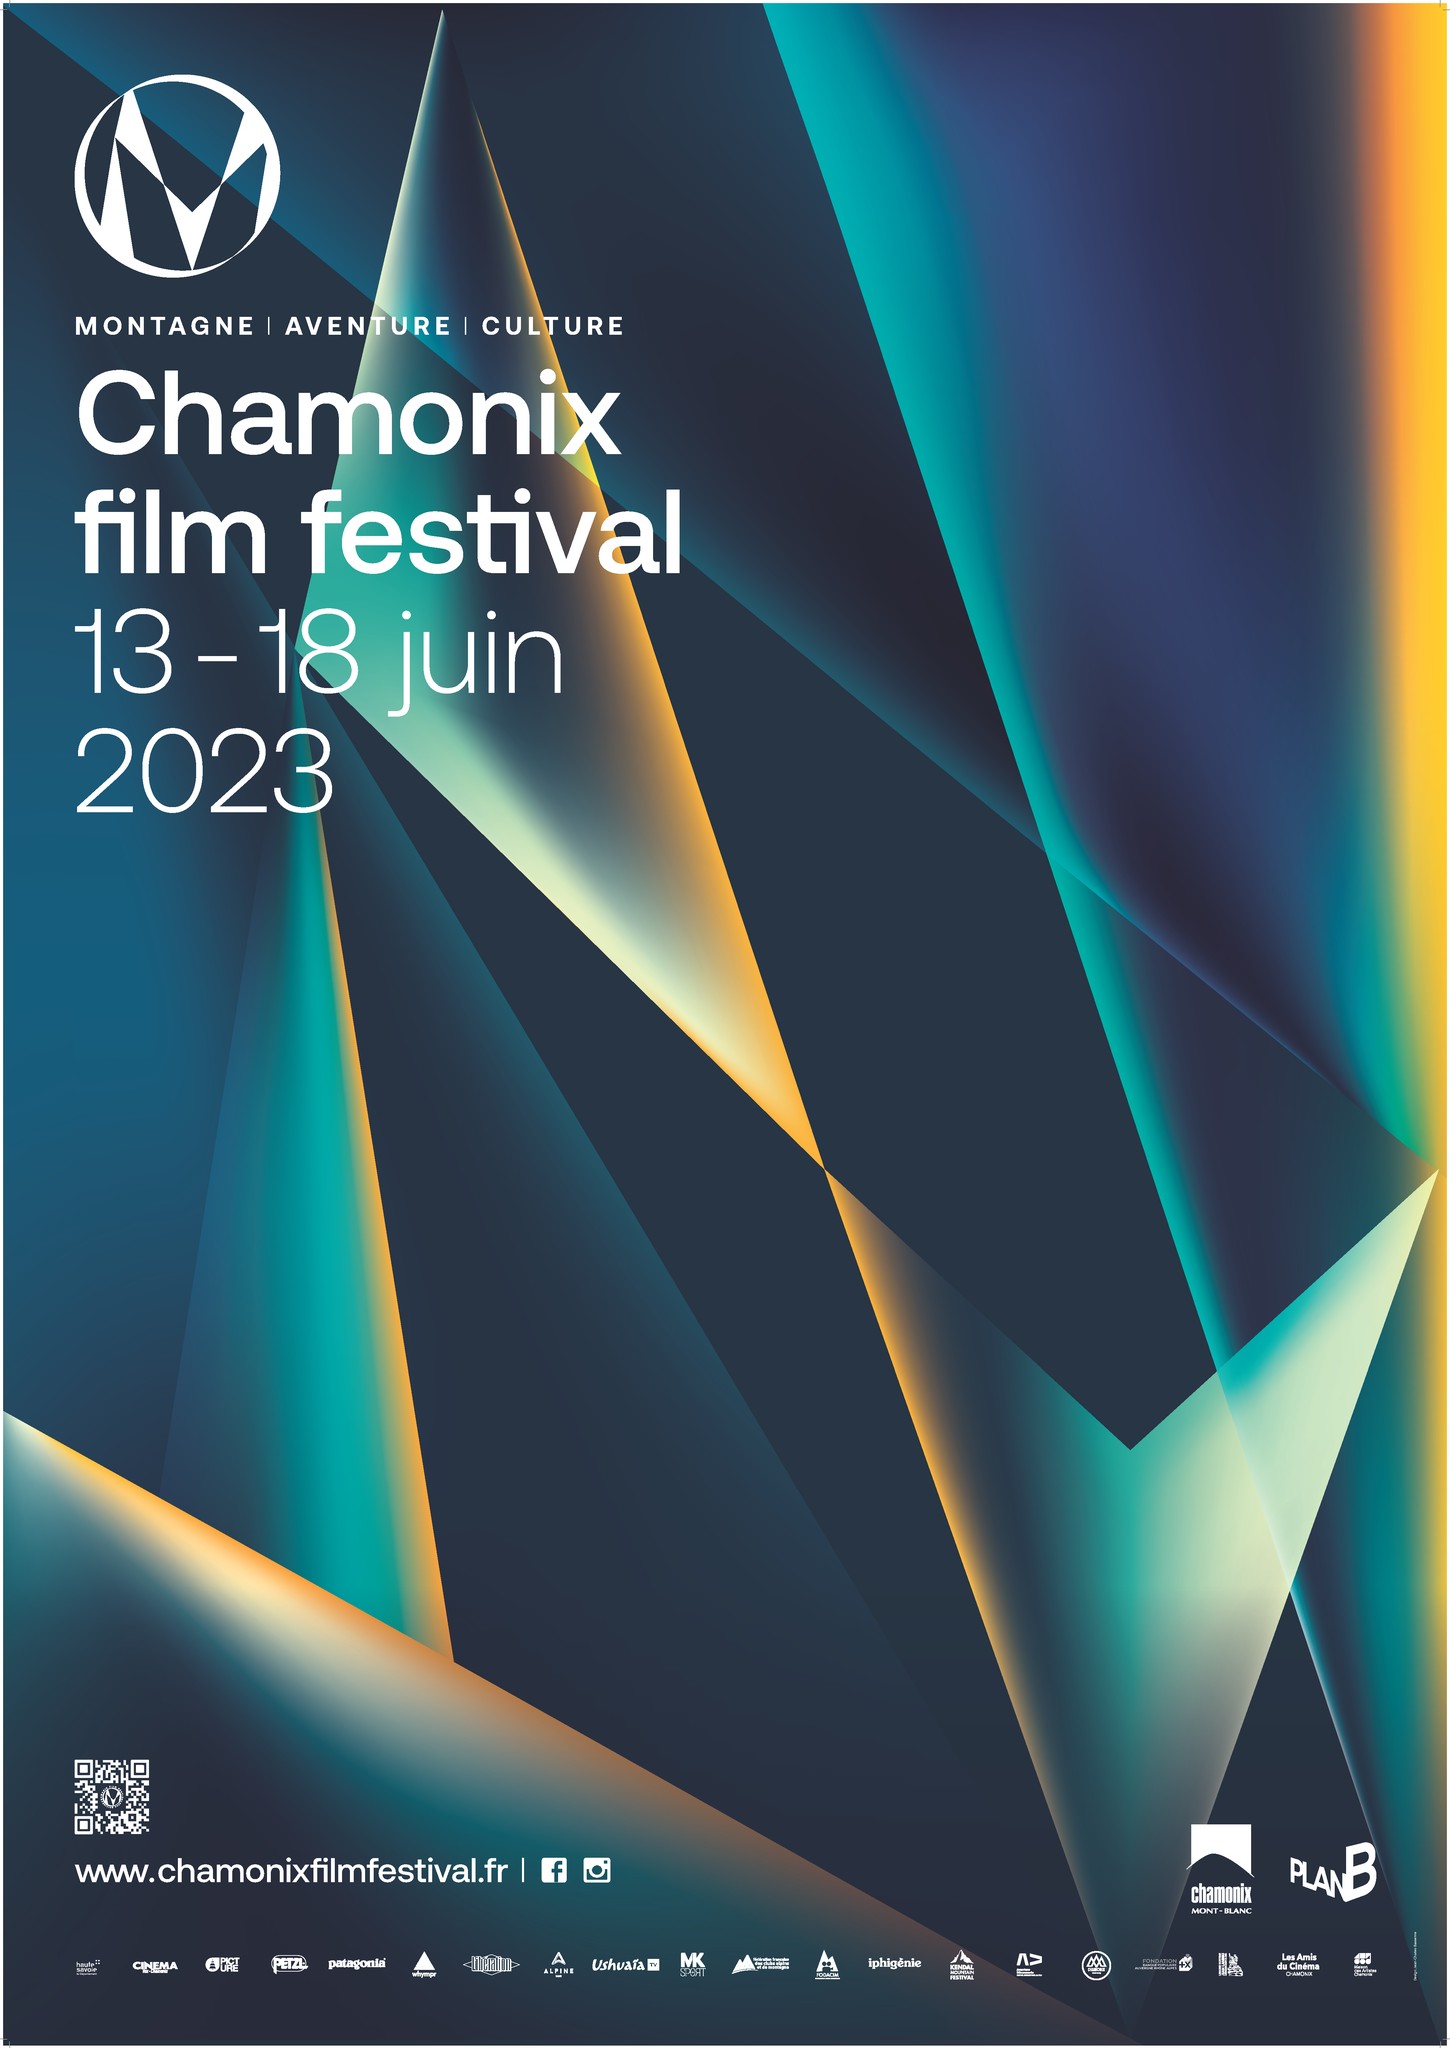 Chamonix Film festival 2023